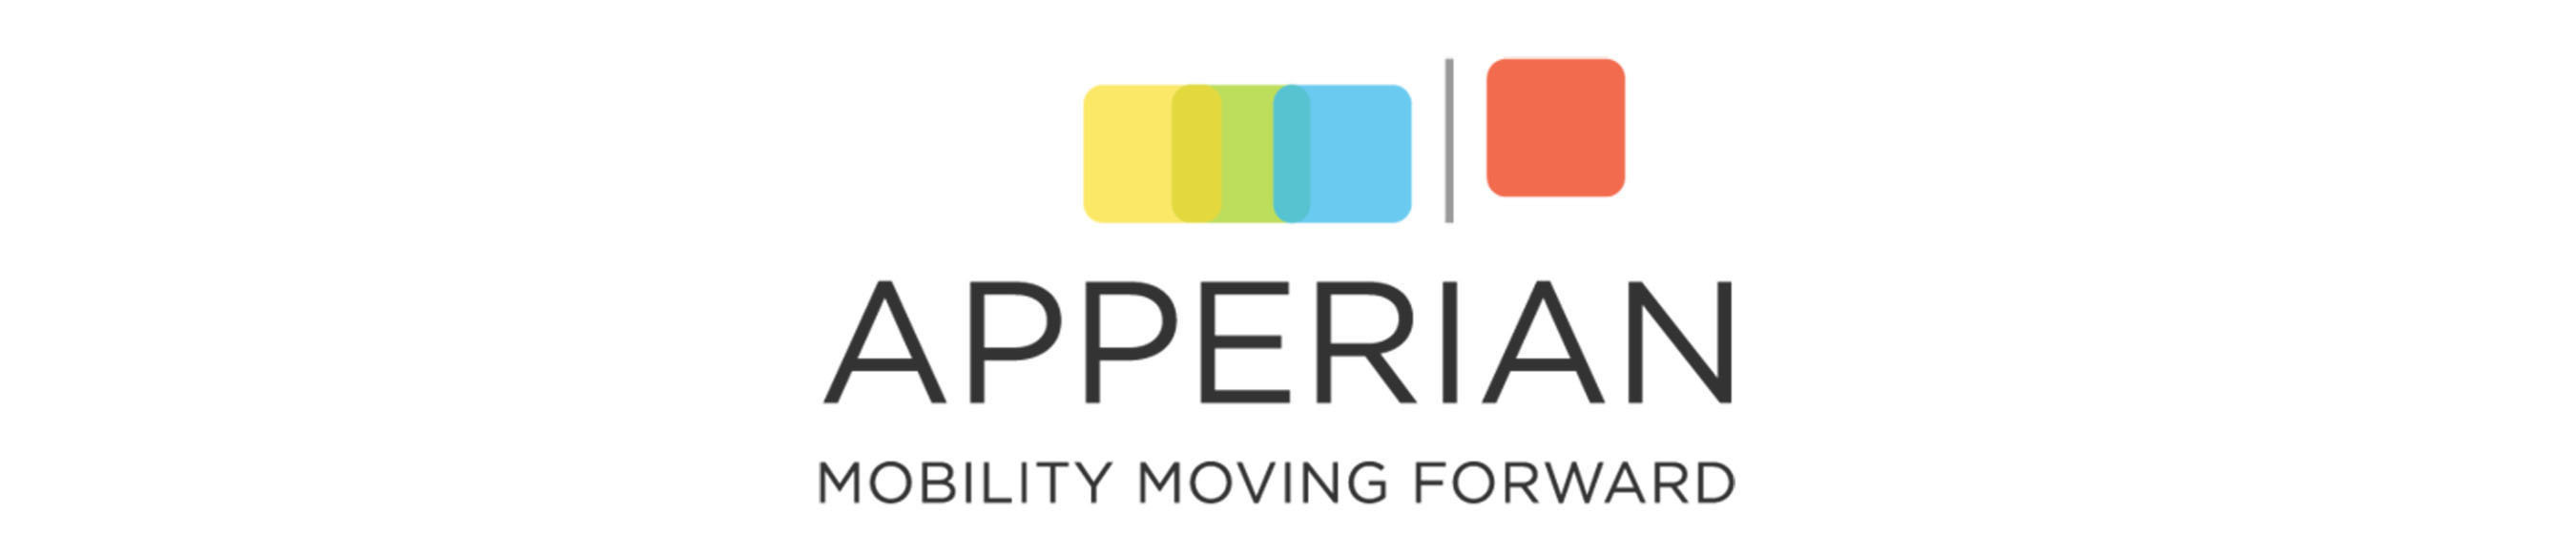 Apperian logo. (PRNewsFoto/Apperian, Inc.) (PRNewsFoto/APPERIAN, INC.)